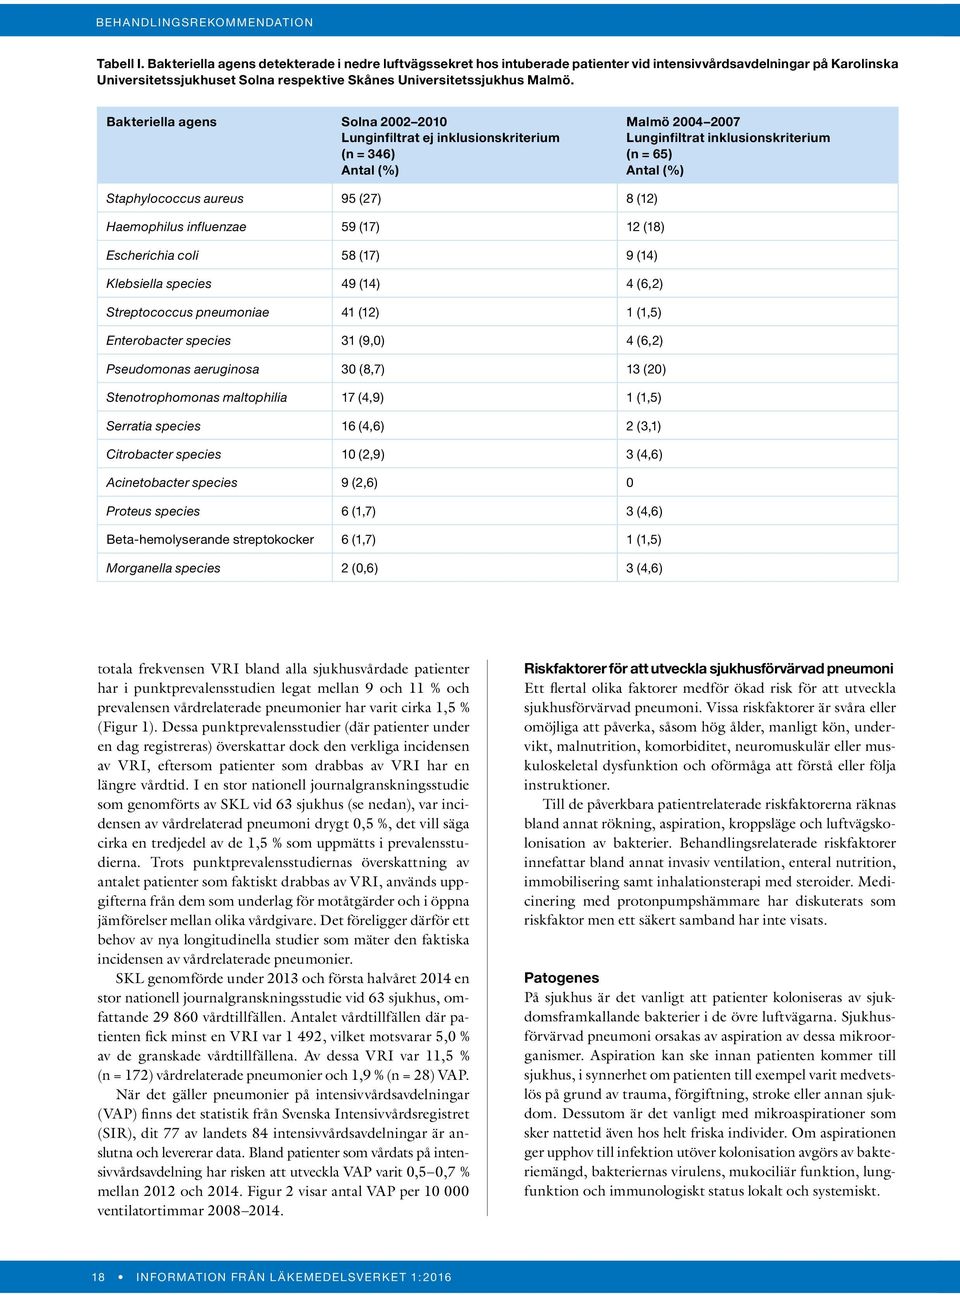 Bakteriella agens Solna 2002 2010 Lunginfiltrat ej inklusionskriterium (n = 346) Antal (%) Malmö 2004 2007 Lunginfiltrat inklusionskriterium (n = 65) Antal (%) Staphylococcus aureus 95 (27) 8 (12)